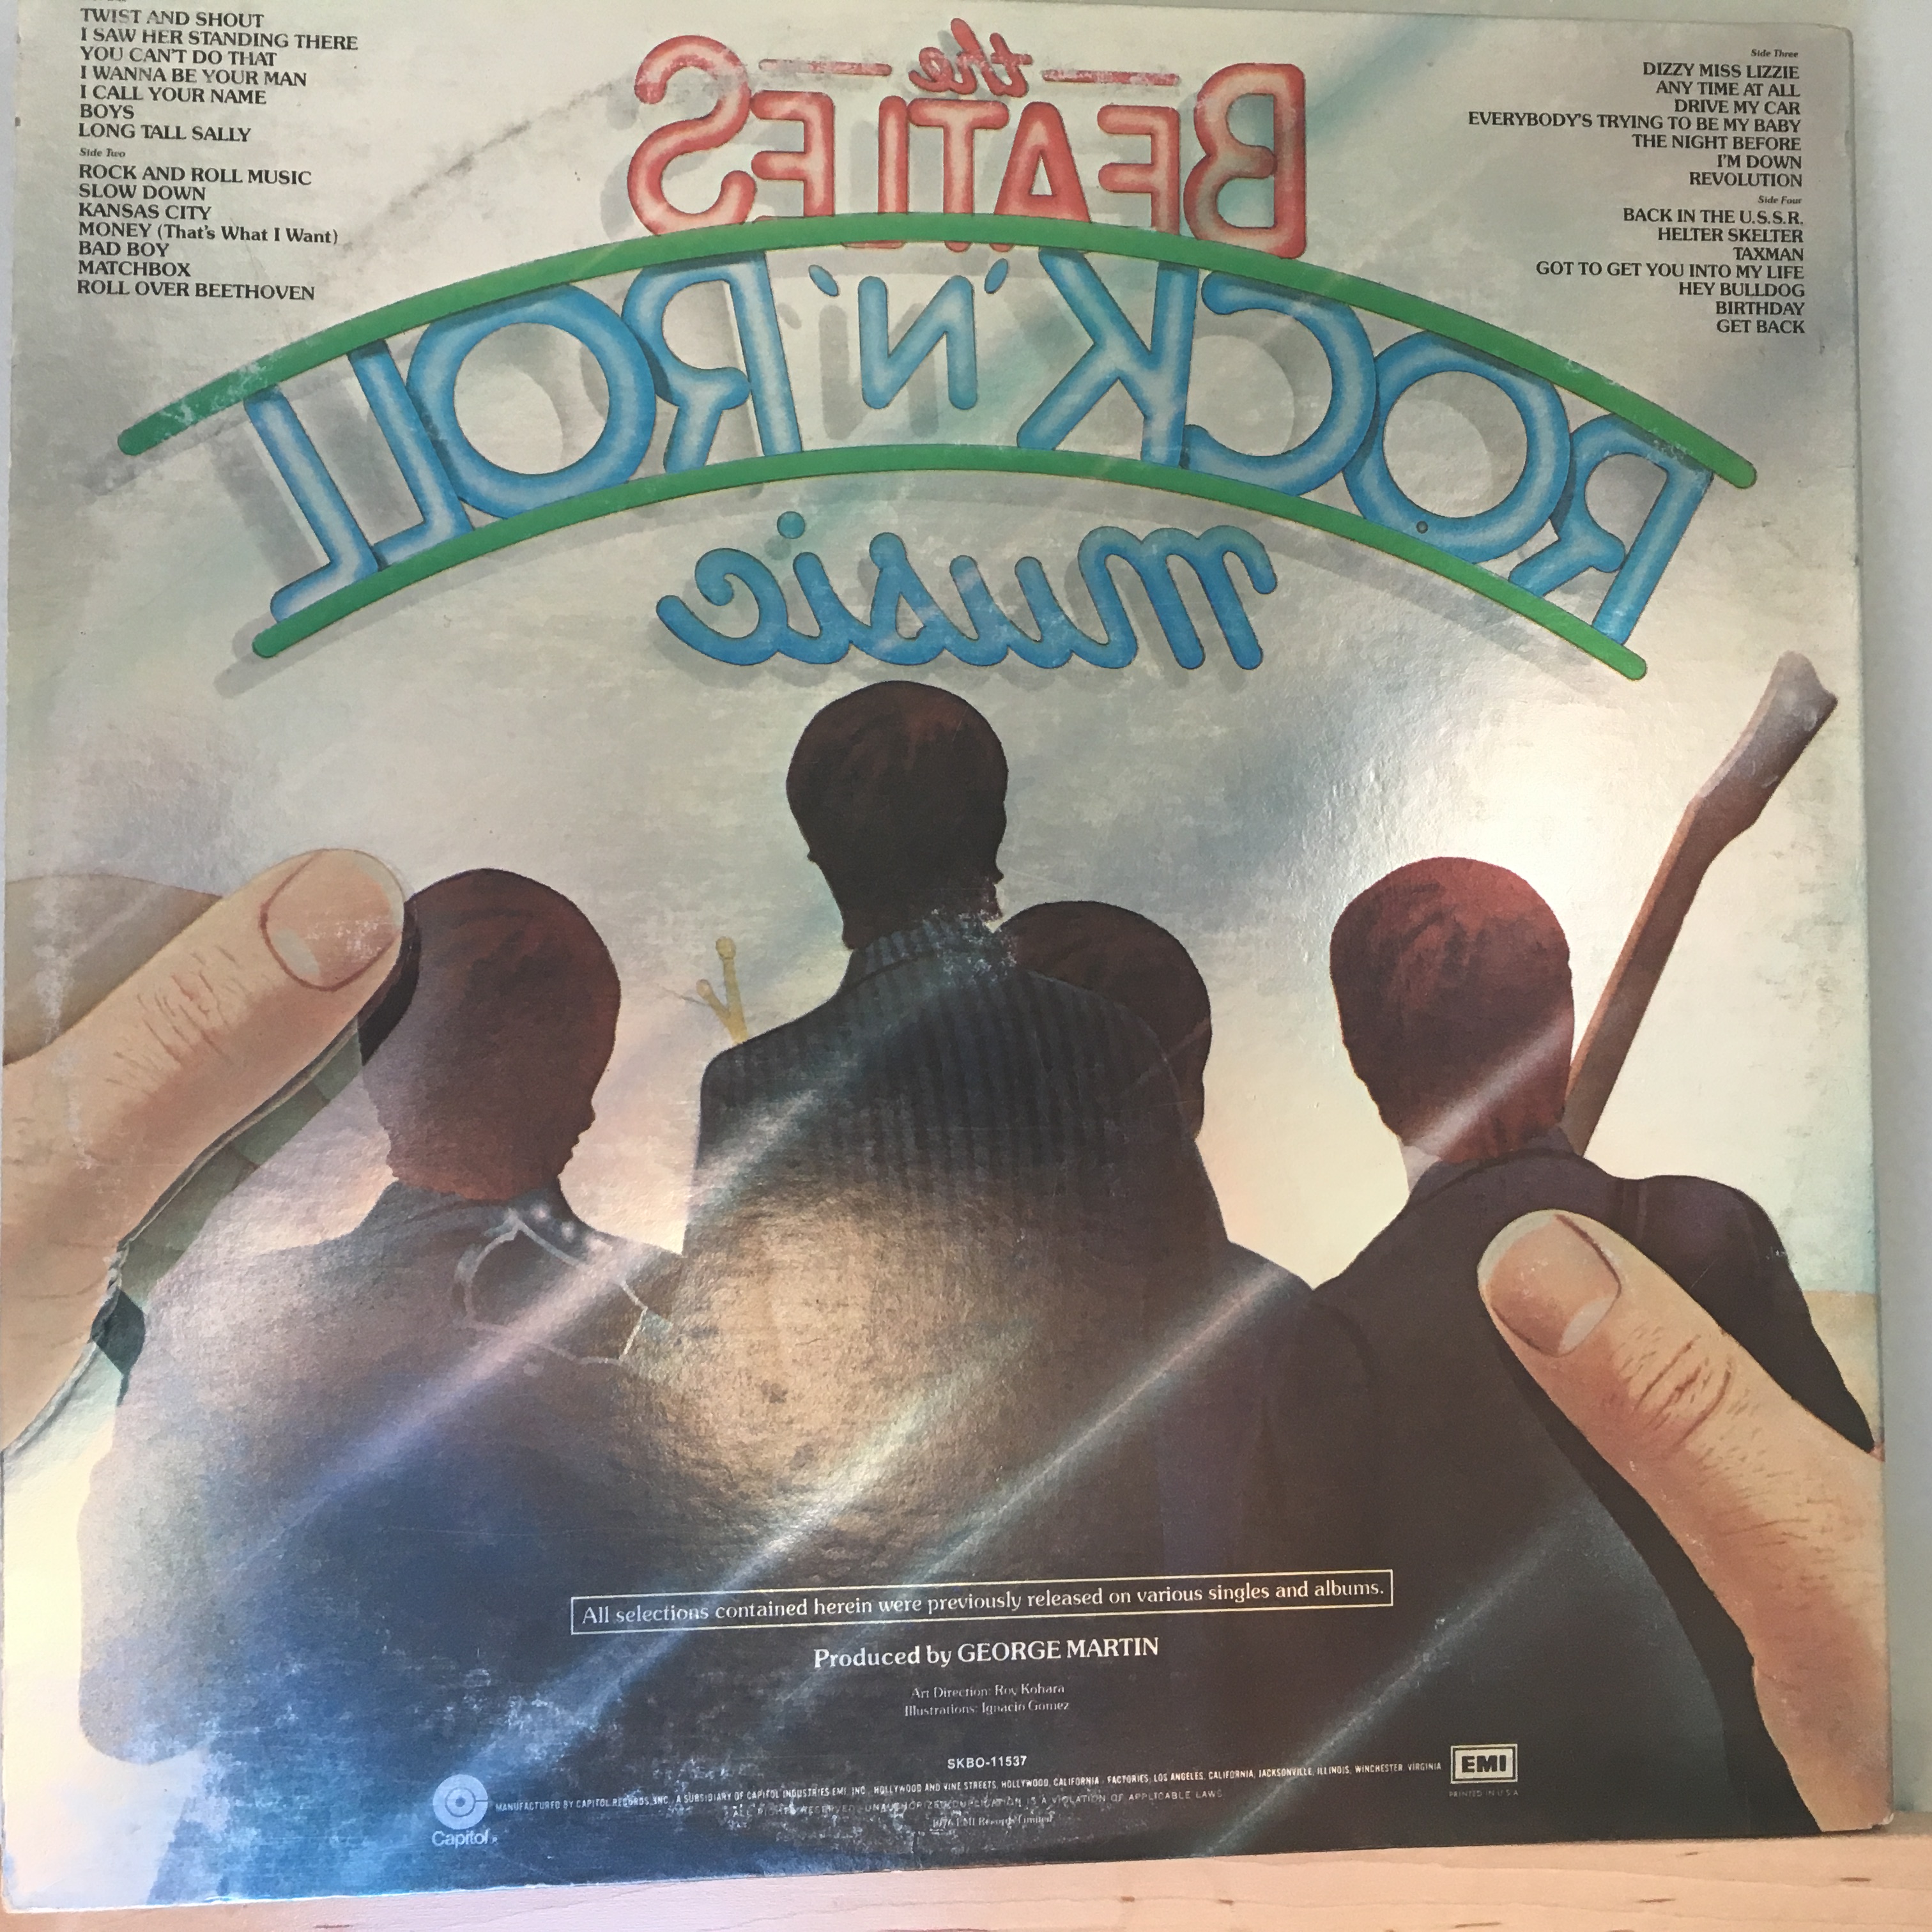 The Beatles Rock ‘n Roll Music Vinyl Distractions